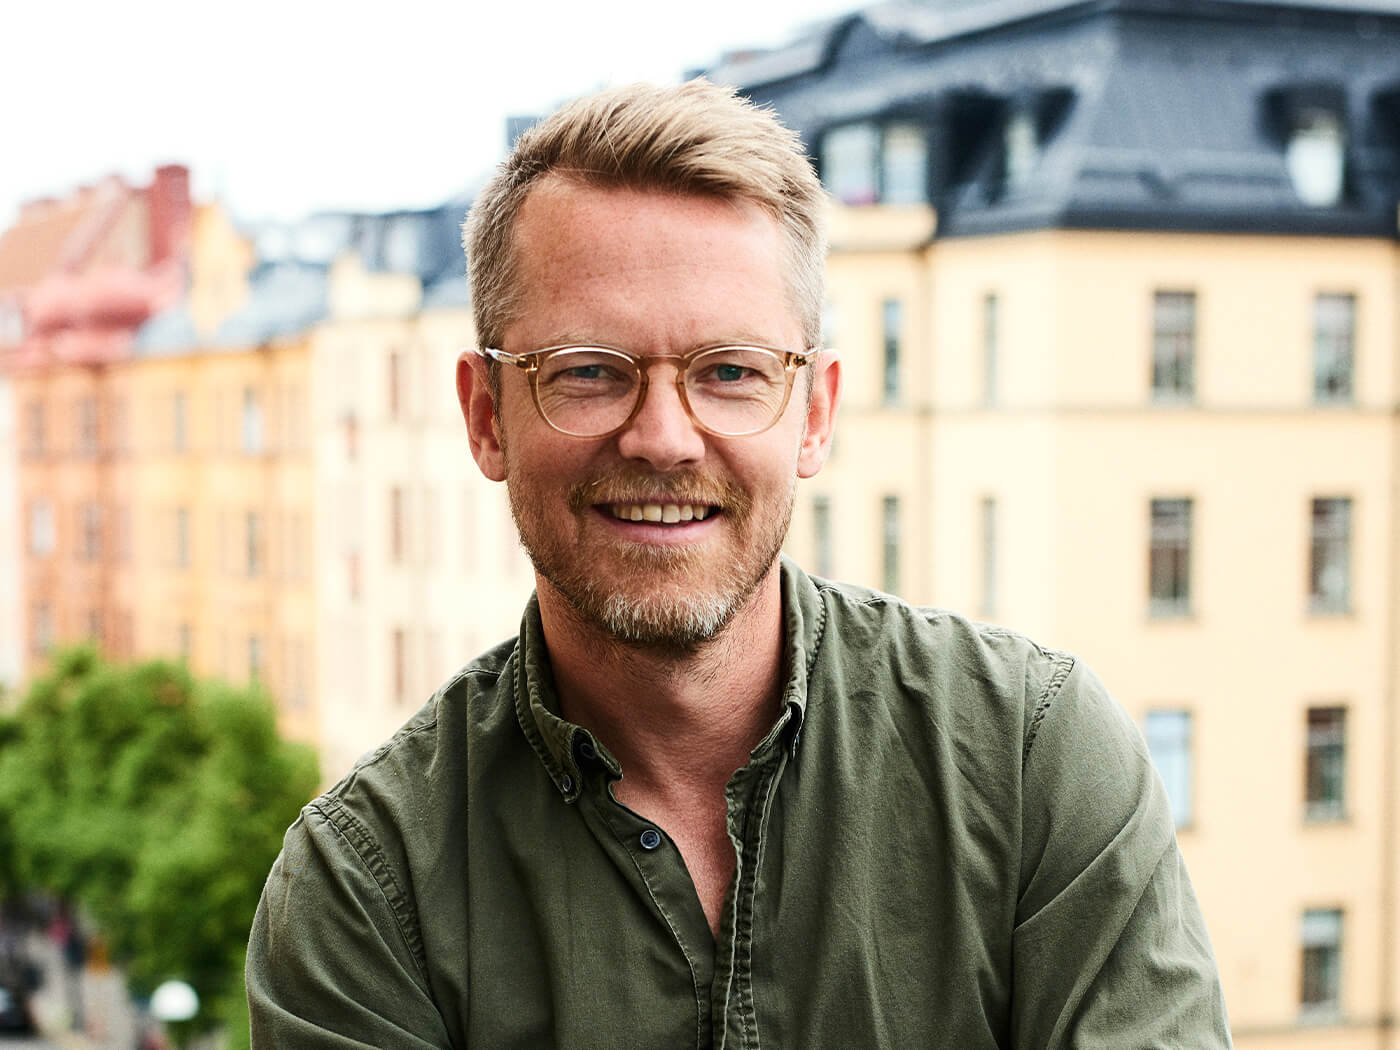 Epidemic CEO and co-founder Oscar Höglund